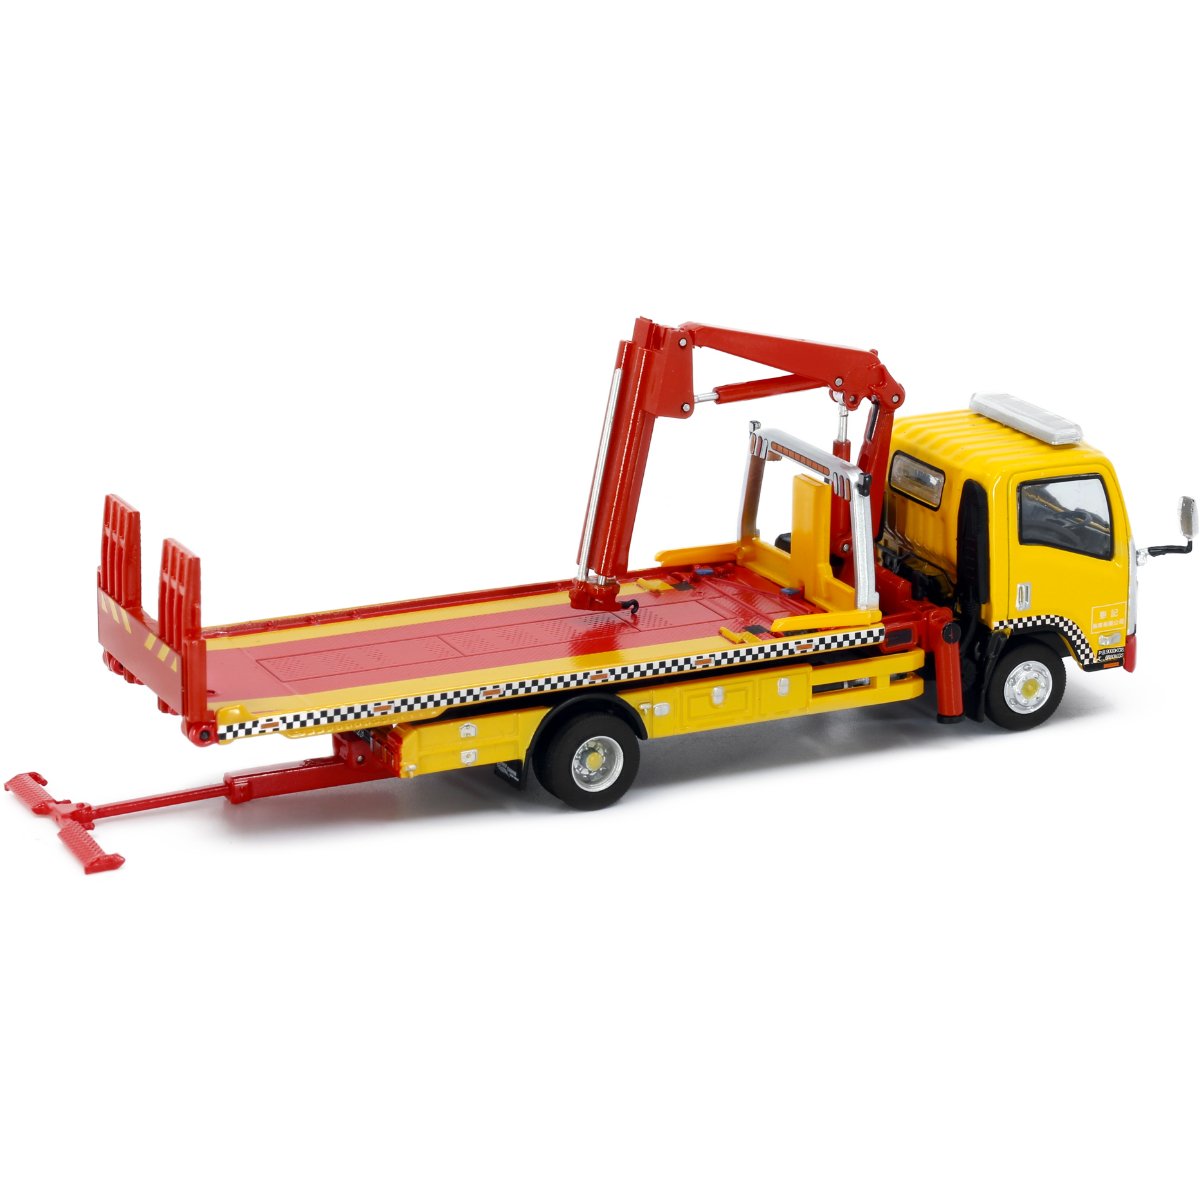 Tiny Models Isuzu N Series Macau Flatbed Tow Truck Yellow (1:64 Scale) - Phillips Hobbies